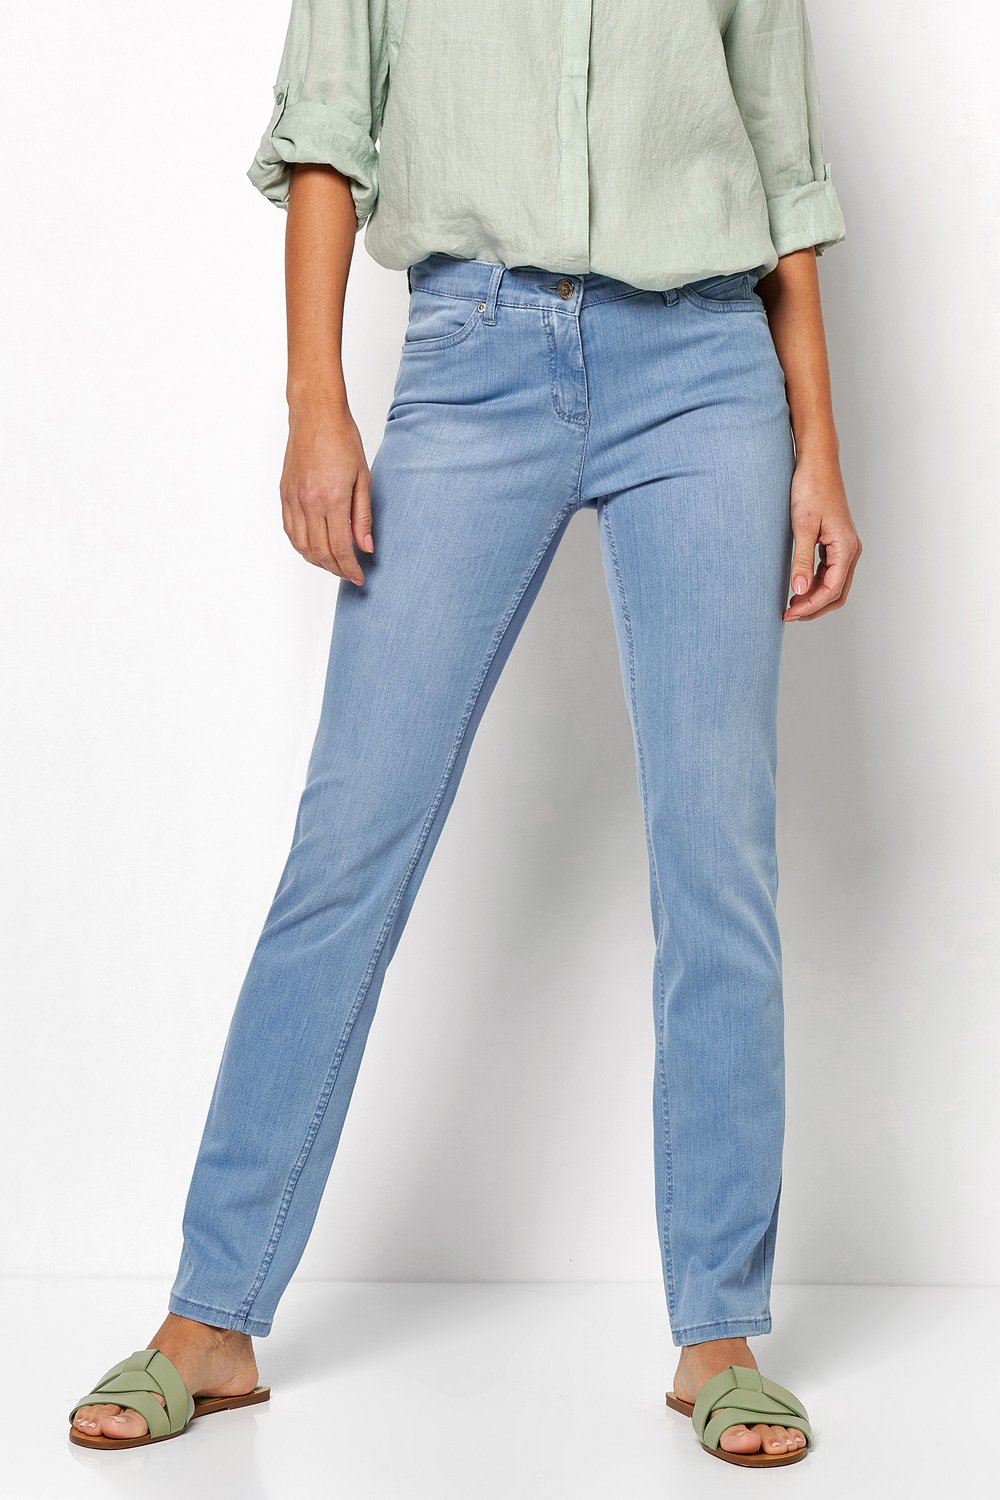 TONI Straight-Jeans »Perfect Shape Straight« von TONI